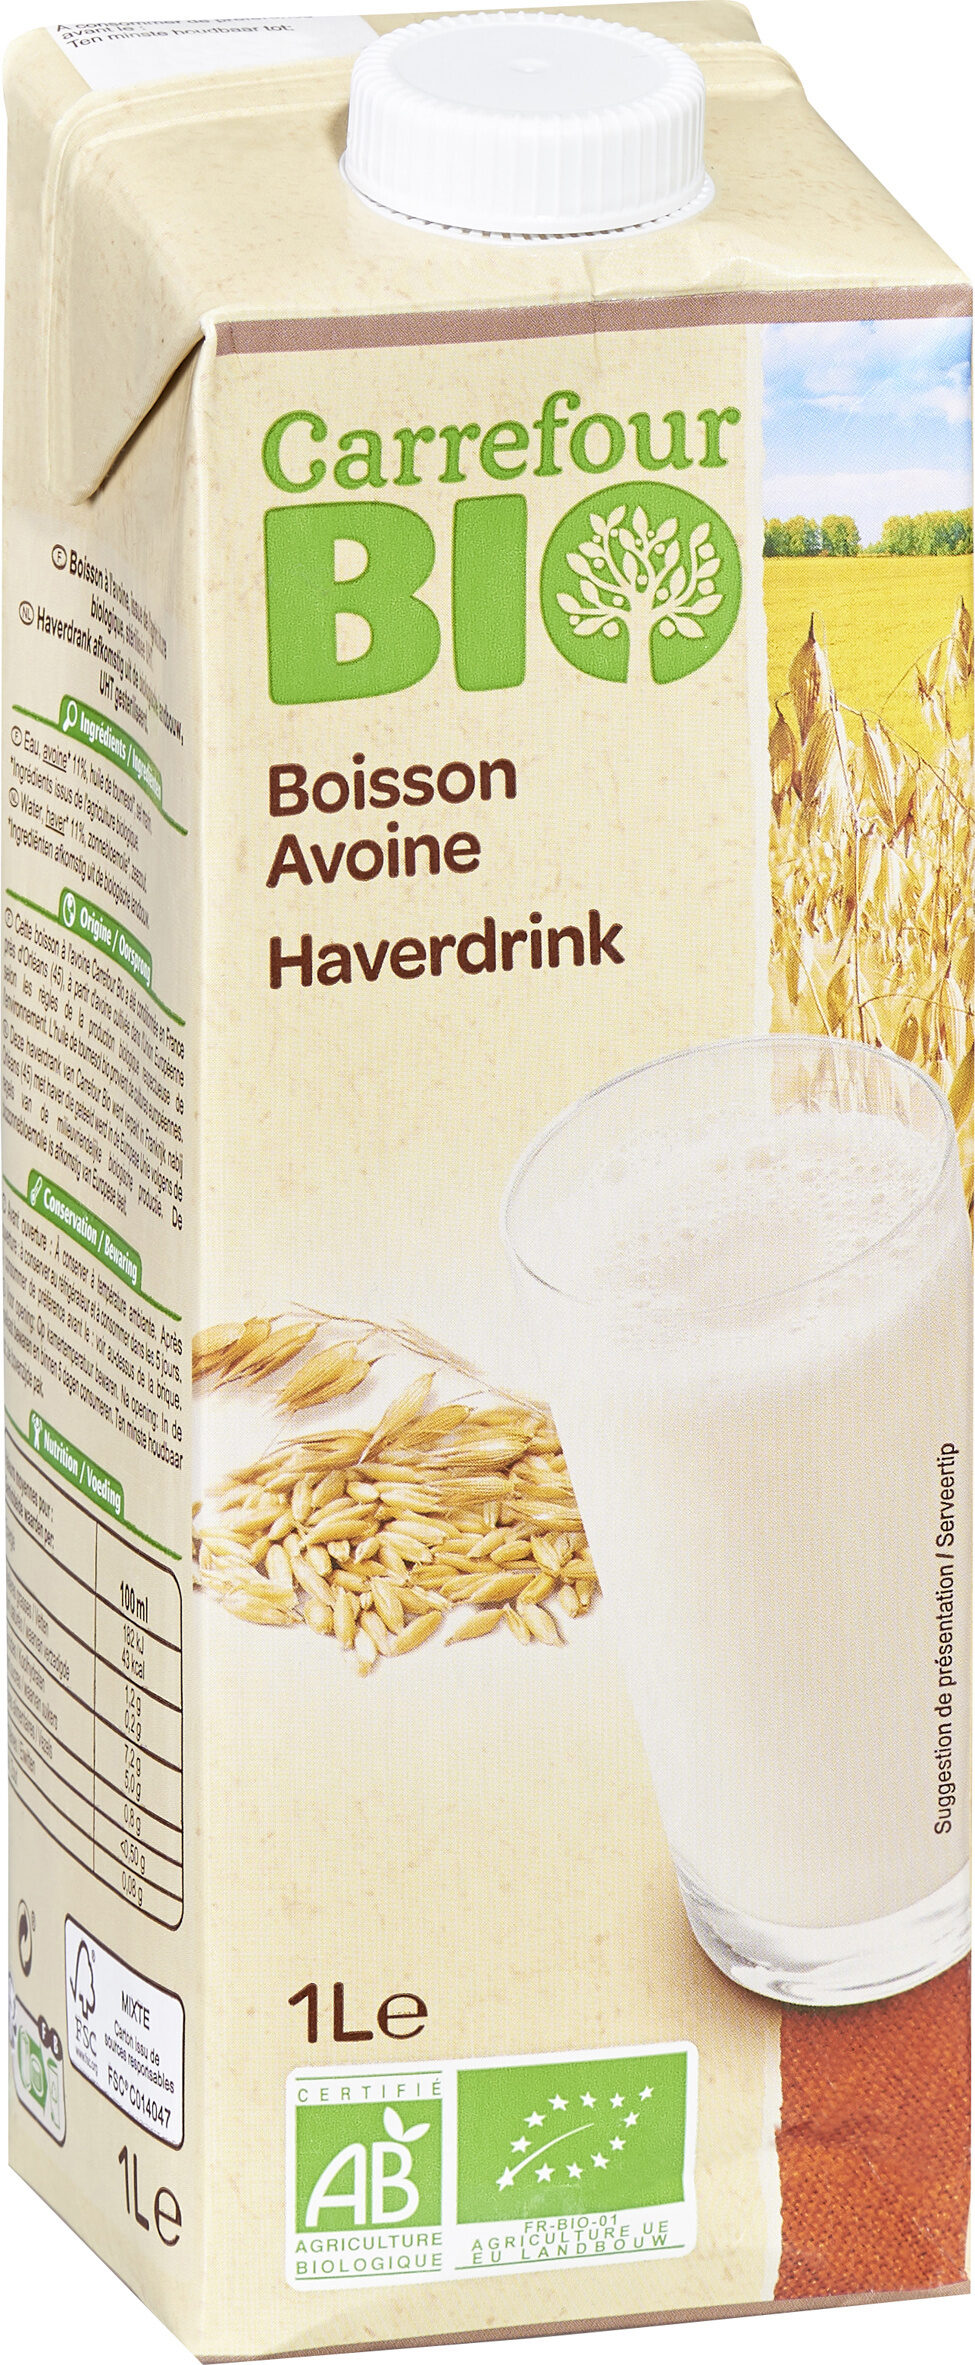 Boisson avoine - Producto - fr